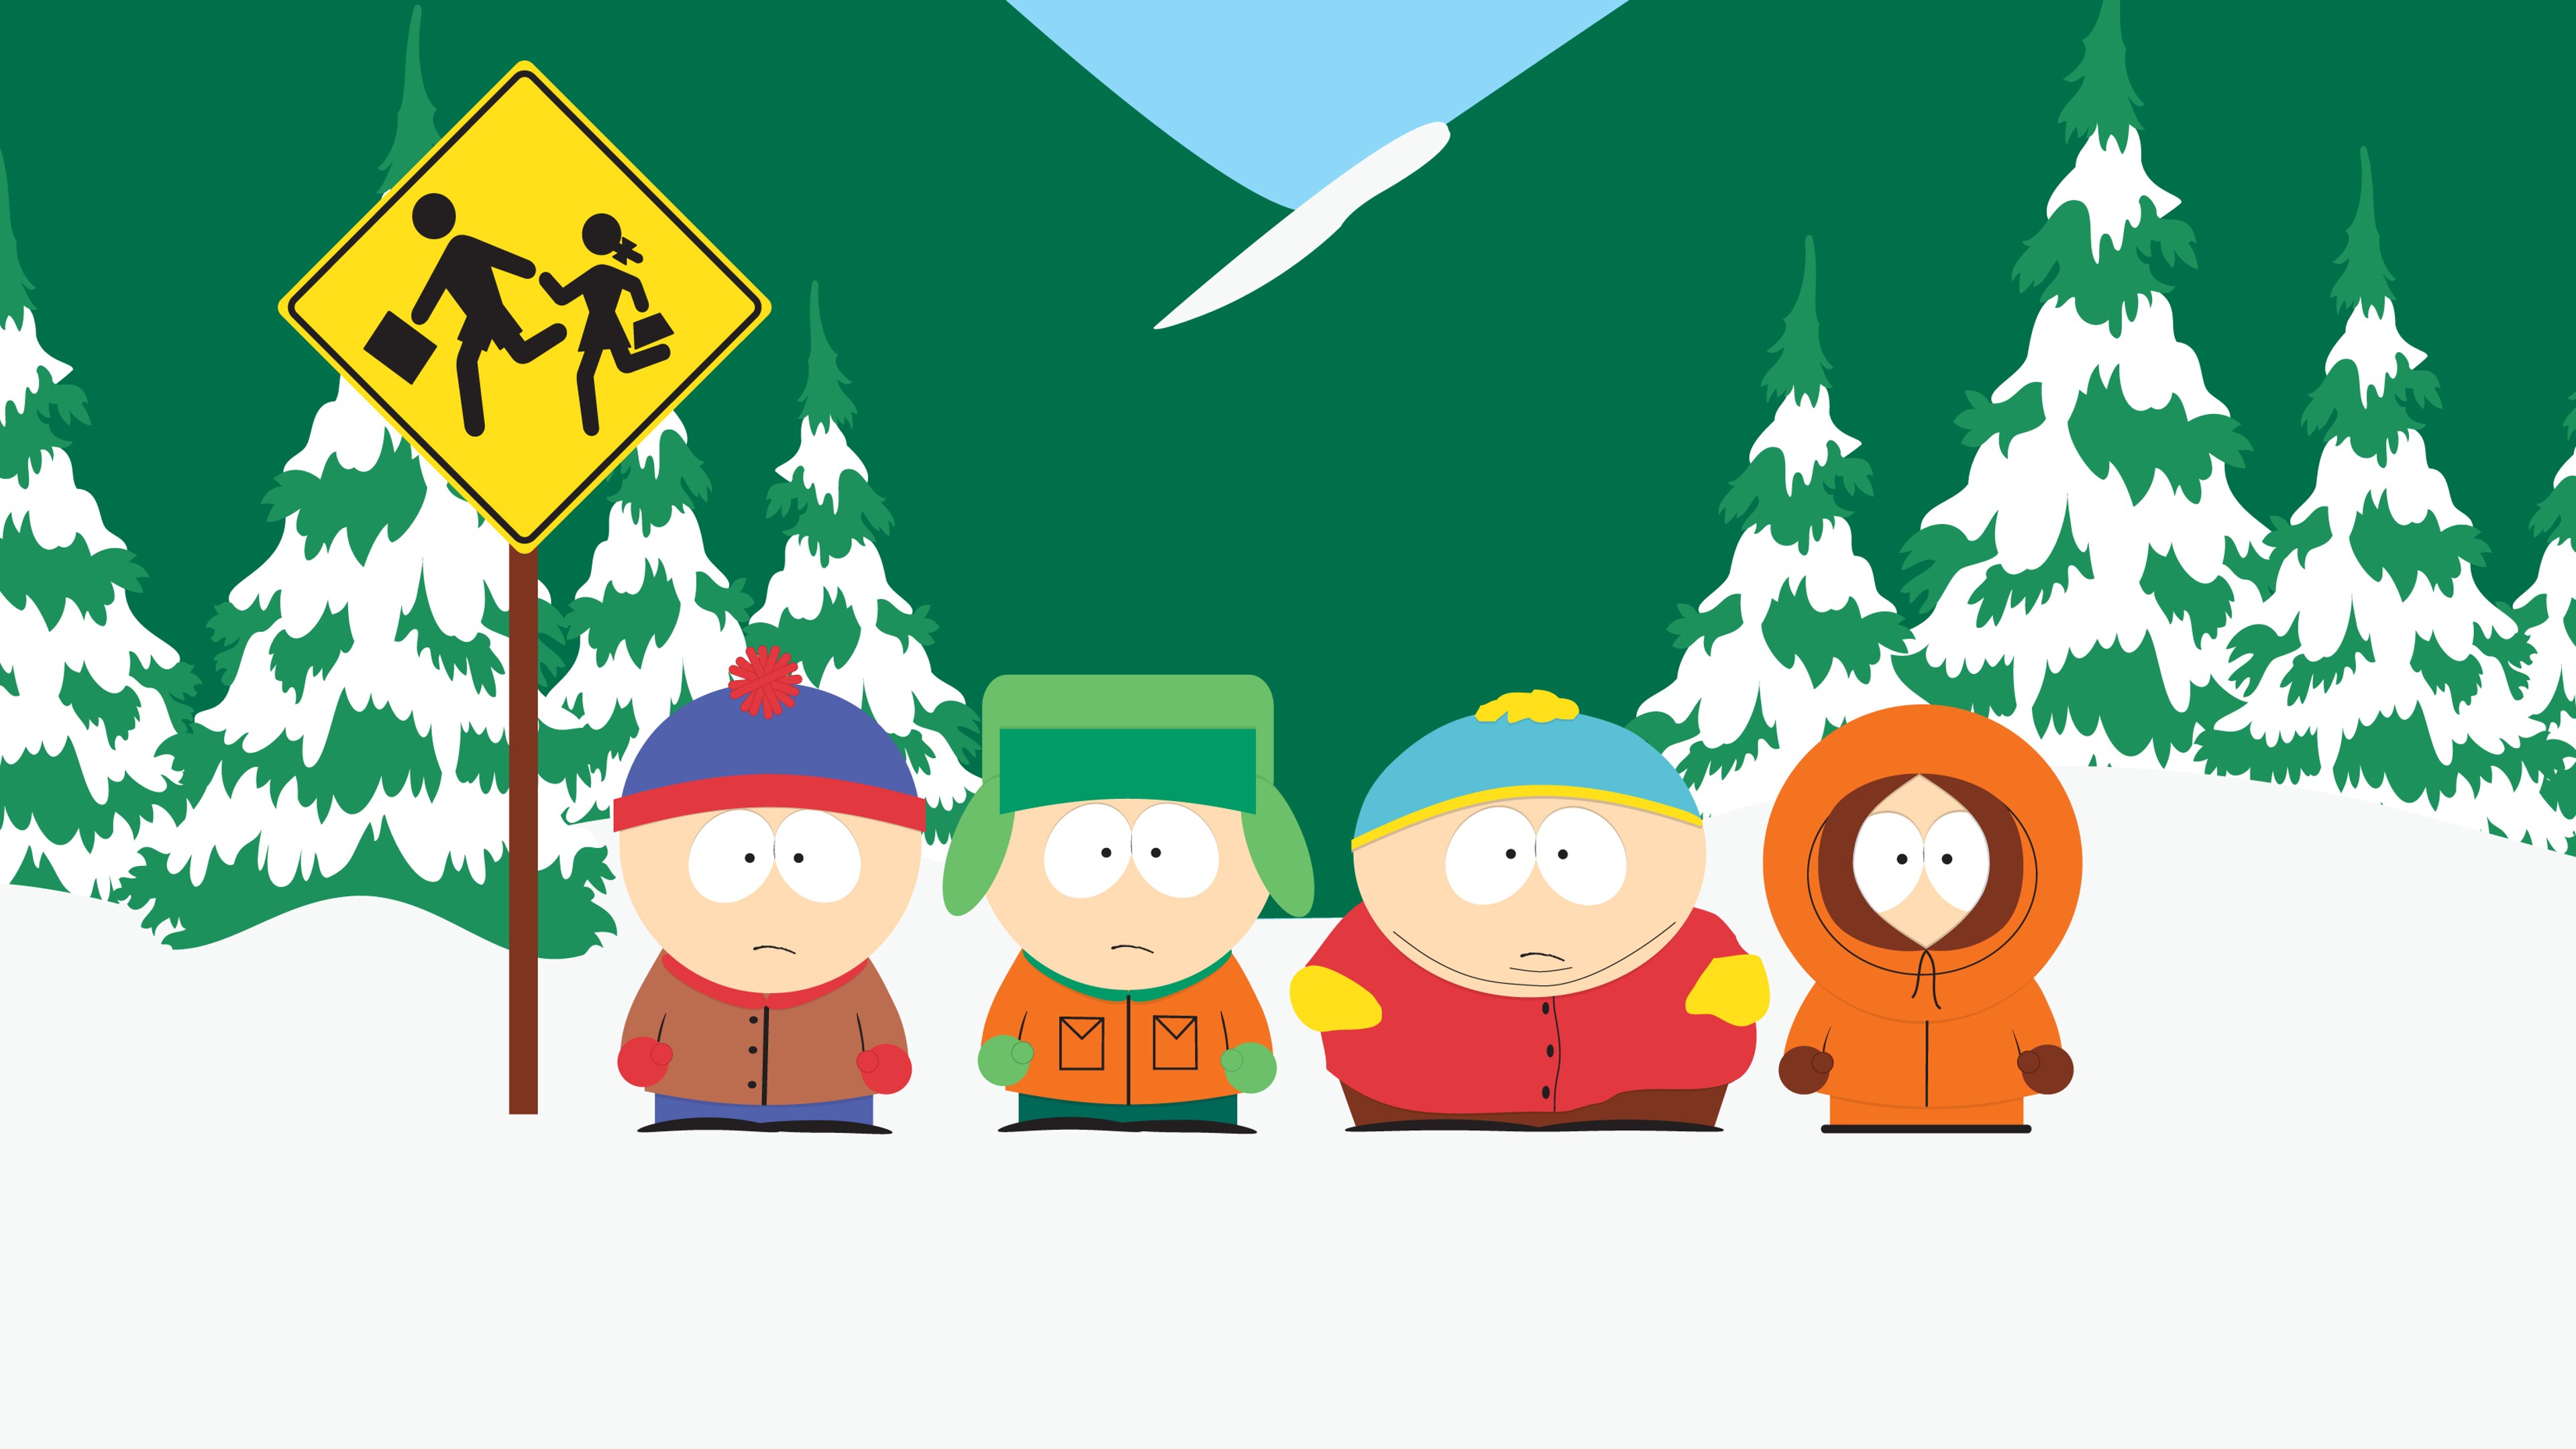 Wallpaper / South Park, Eric Cartman, Kenny McCormick, digital art, series, Kyle Broflovski, Stan Marsh, snow, frontal view